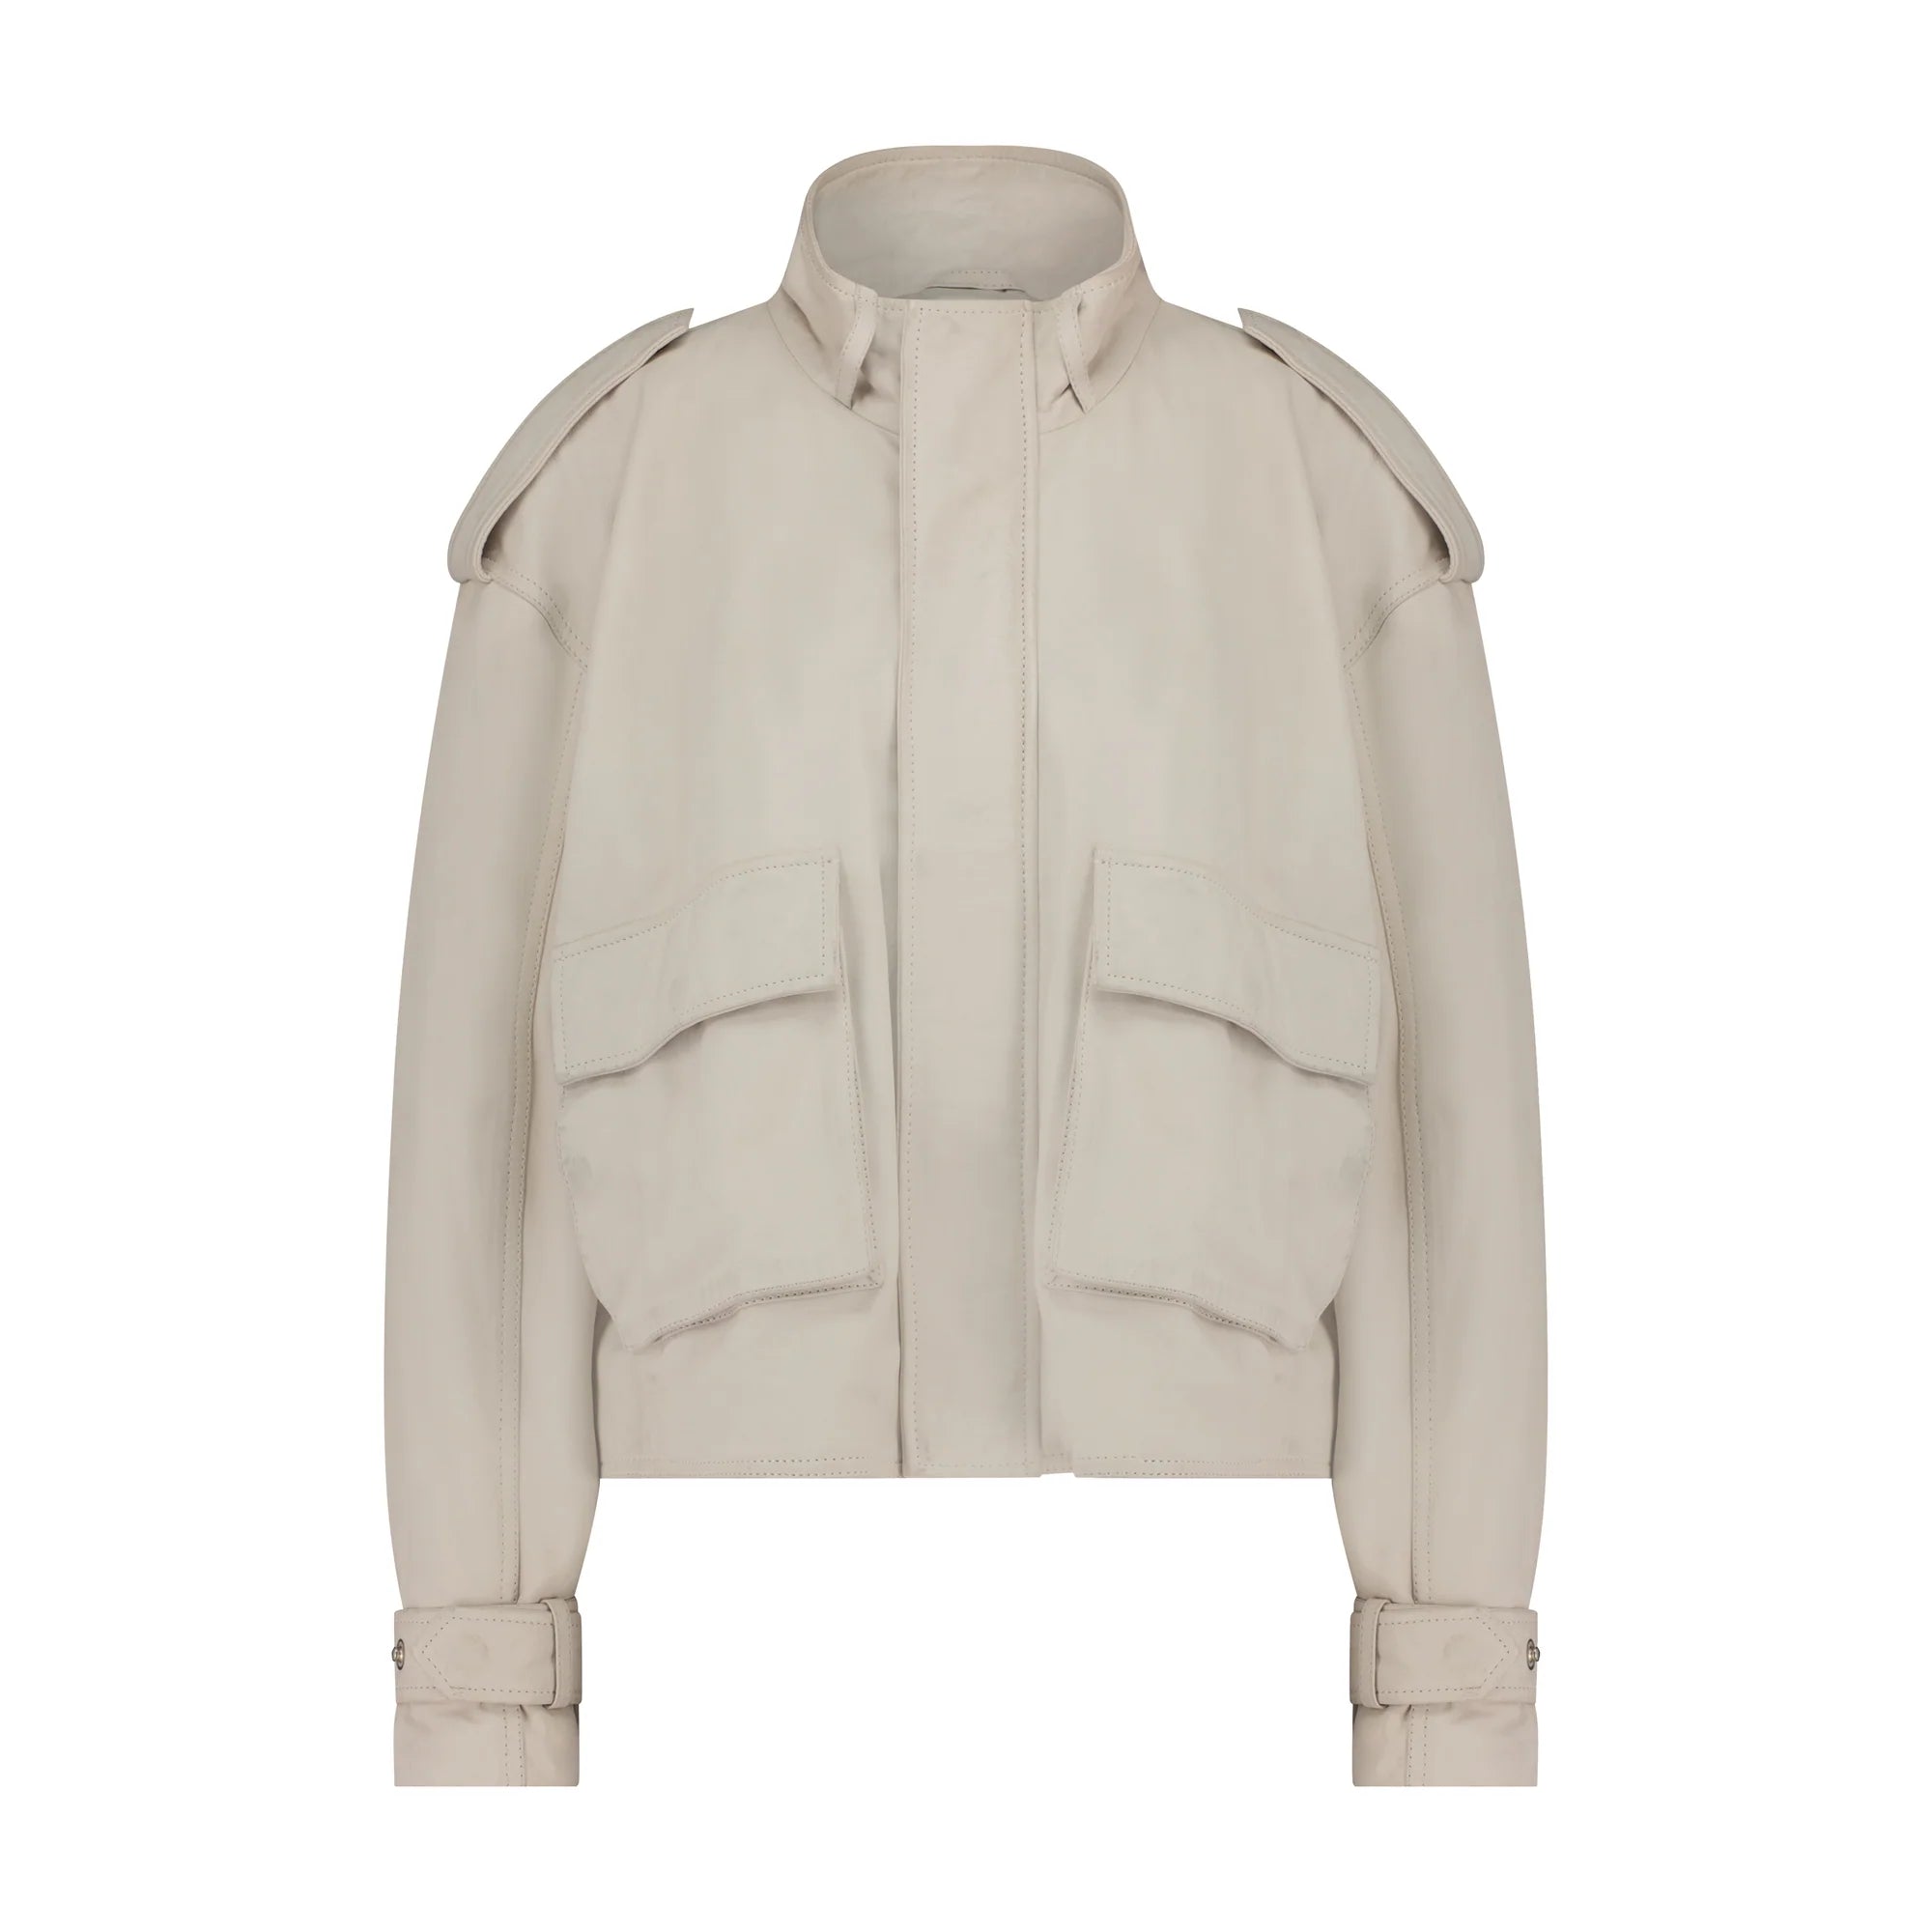 Beverley jacket - off white